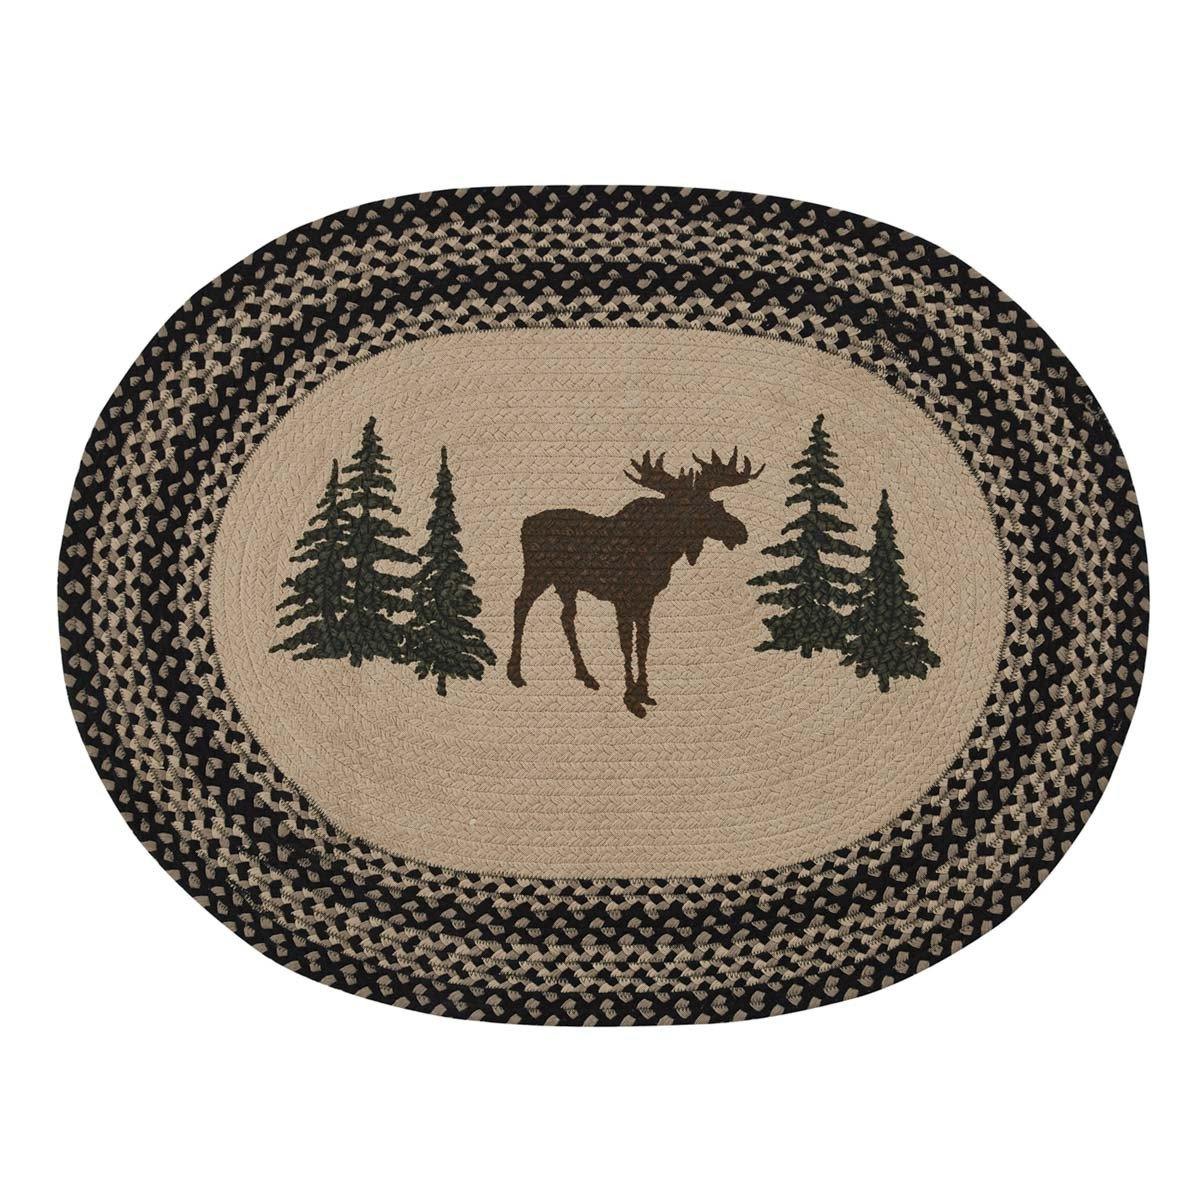 Moose Printed Braided Rug 2.6' x 3.5' Park Designs - The Fox Decor